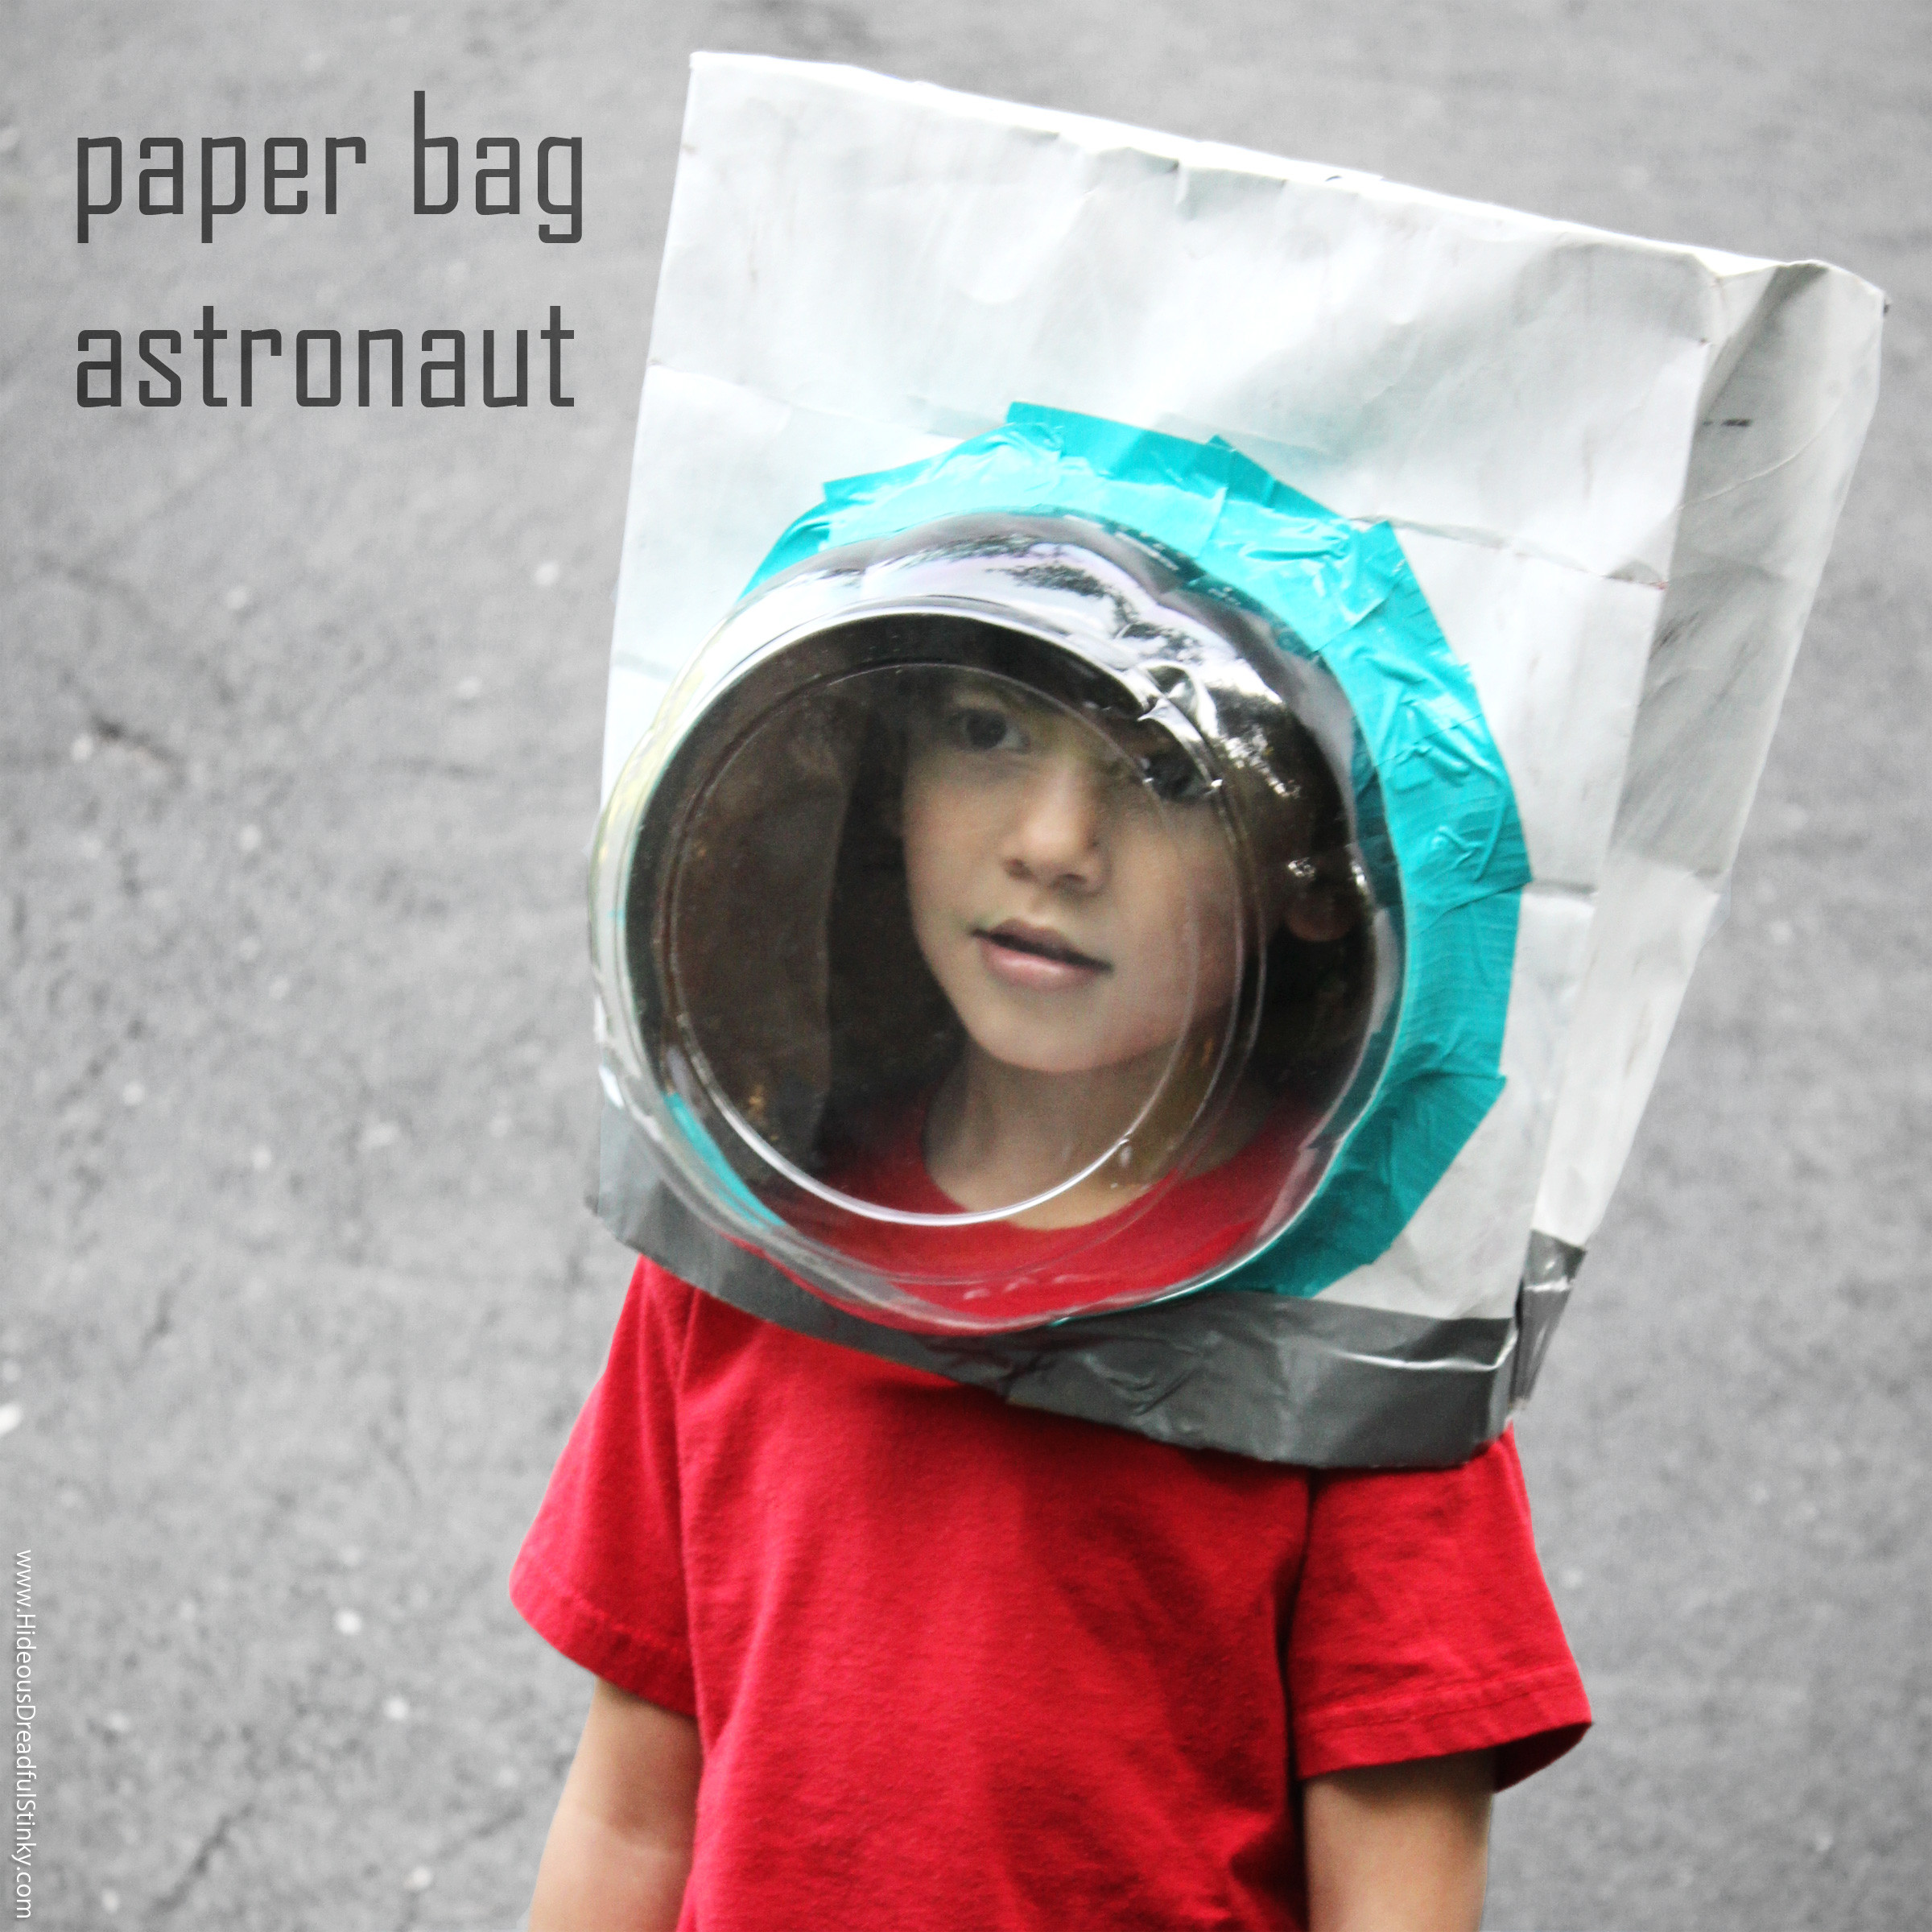 Best ideas about DIY Astronaut Helmet
. Save or Pin Paper Bag Astronaut Helmet Tutorial Now.